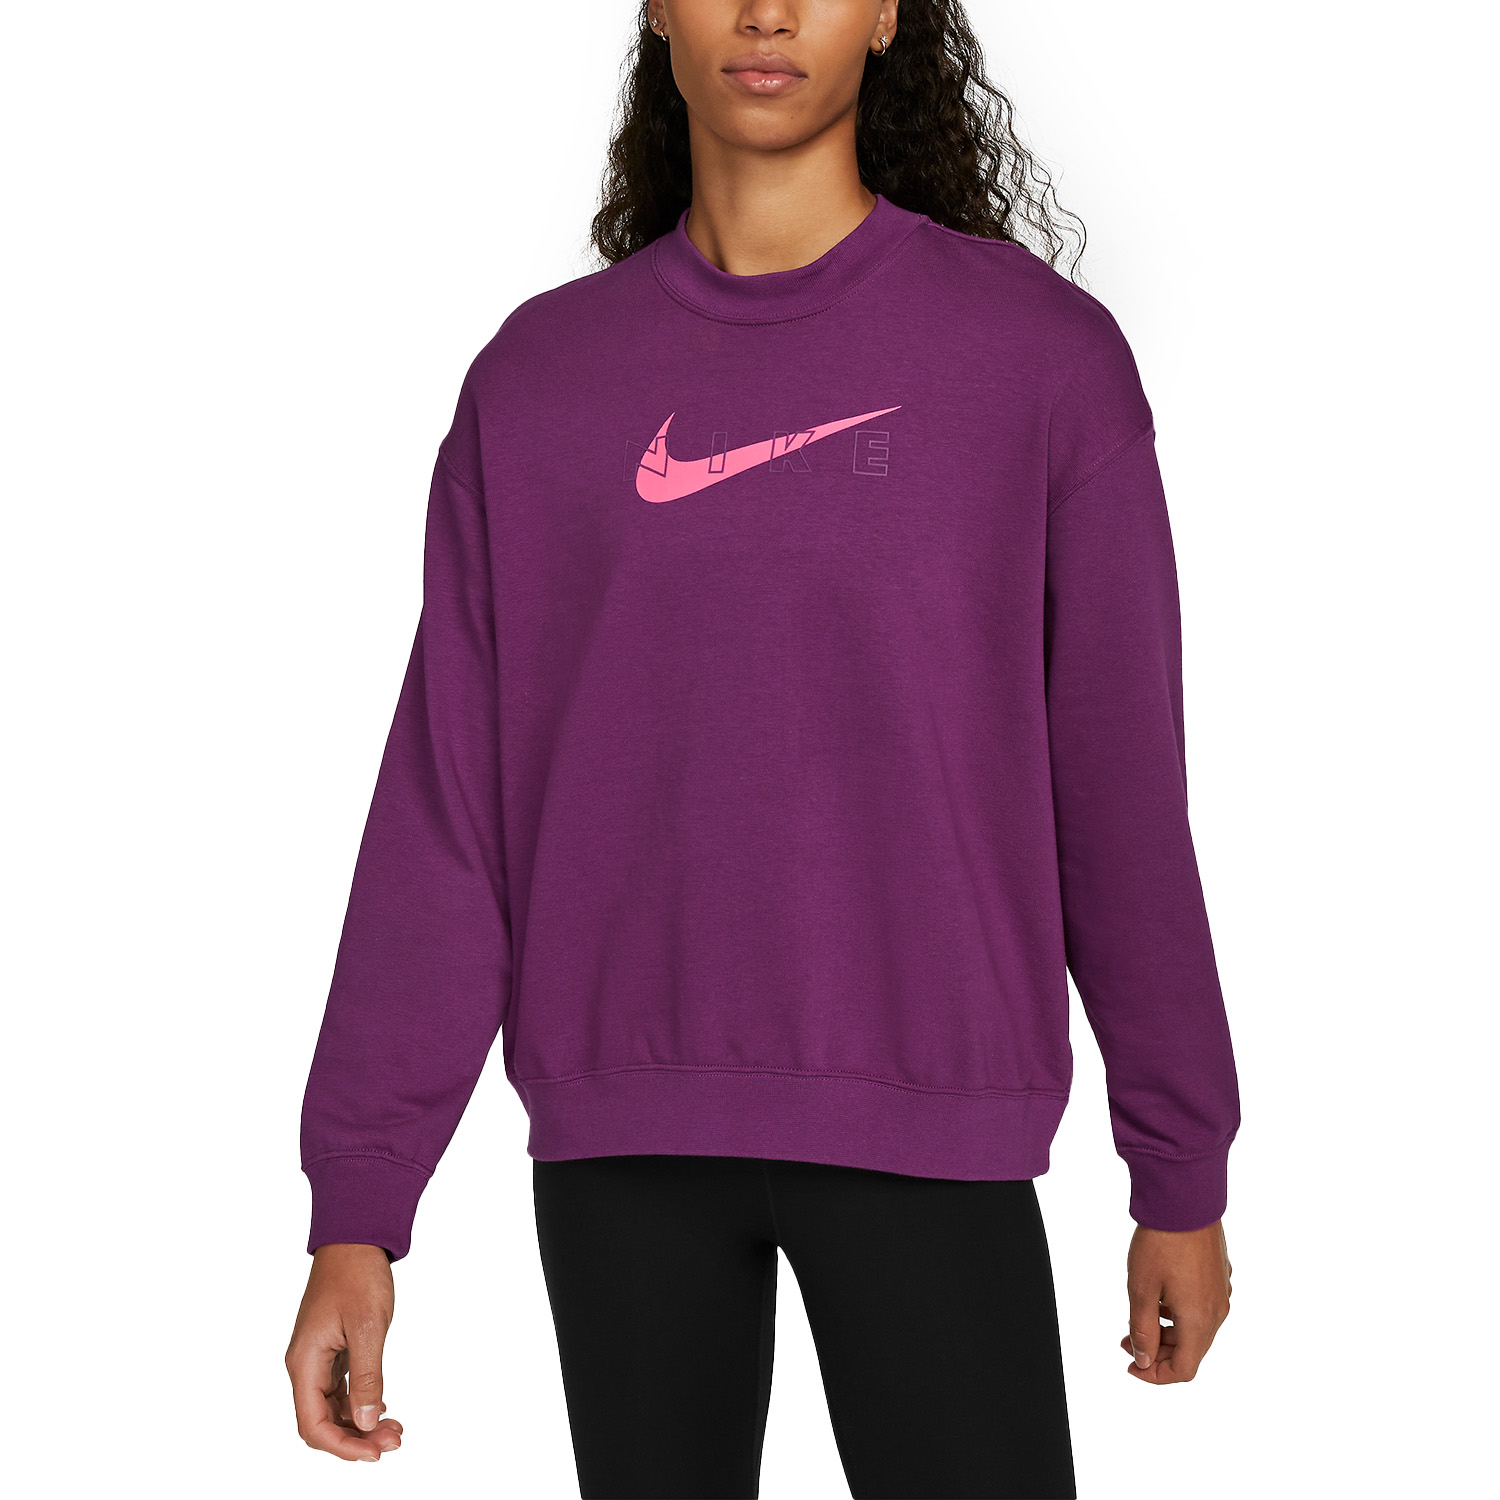 Nike Dri-FIT Get Fit Sweathshirt - Viotech/Hyper Pink